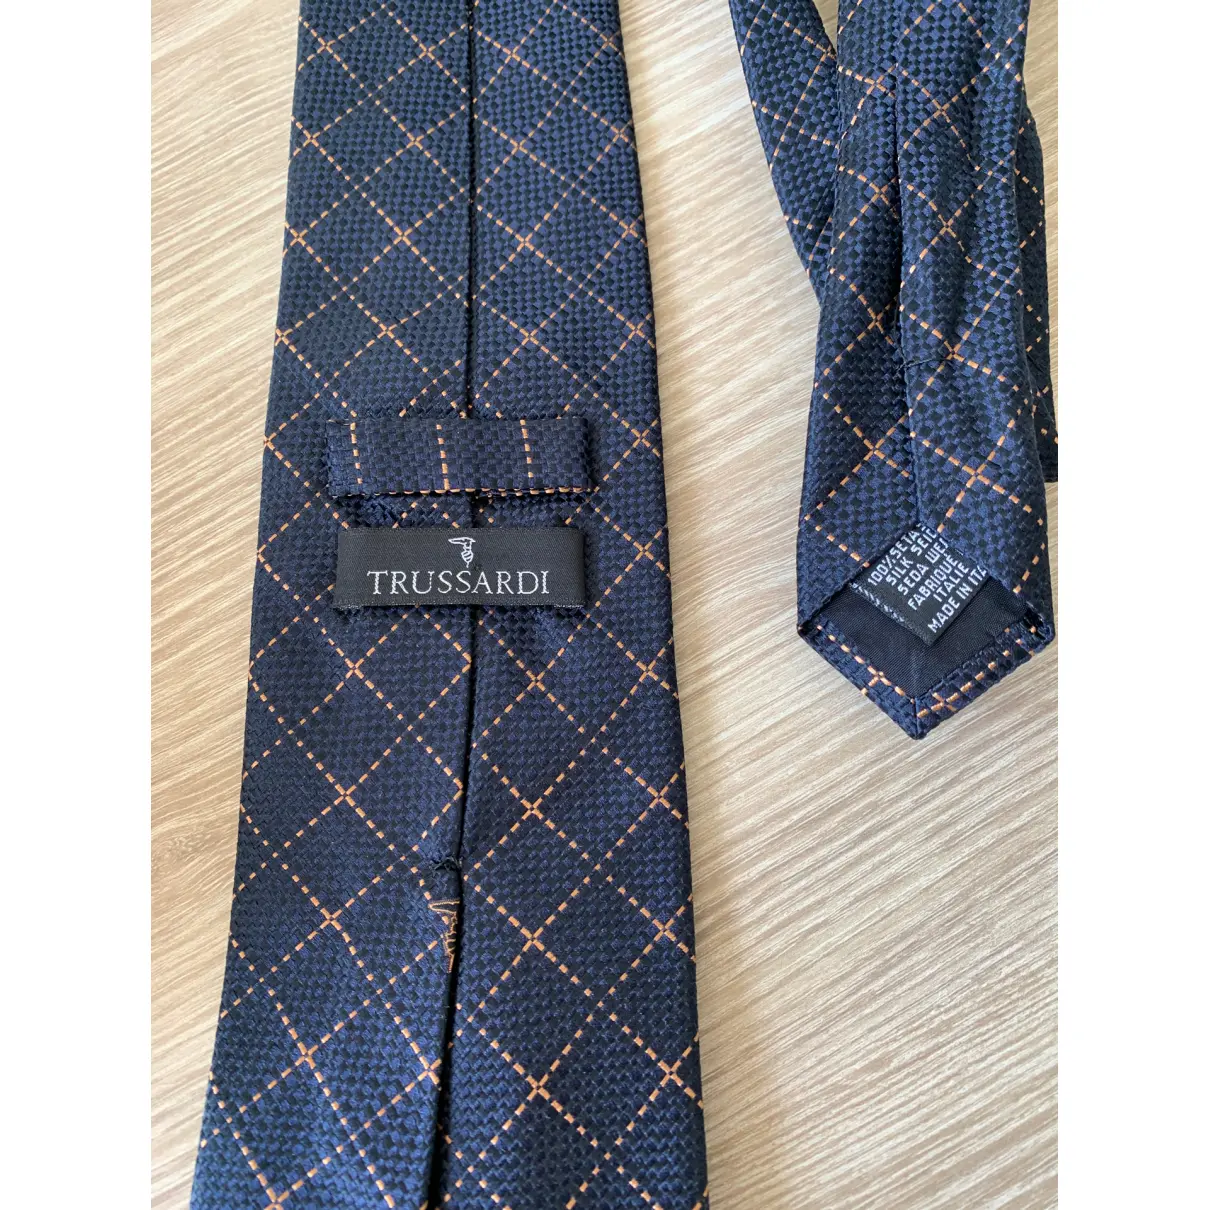 Buy Trussardi Silk tie online